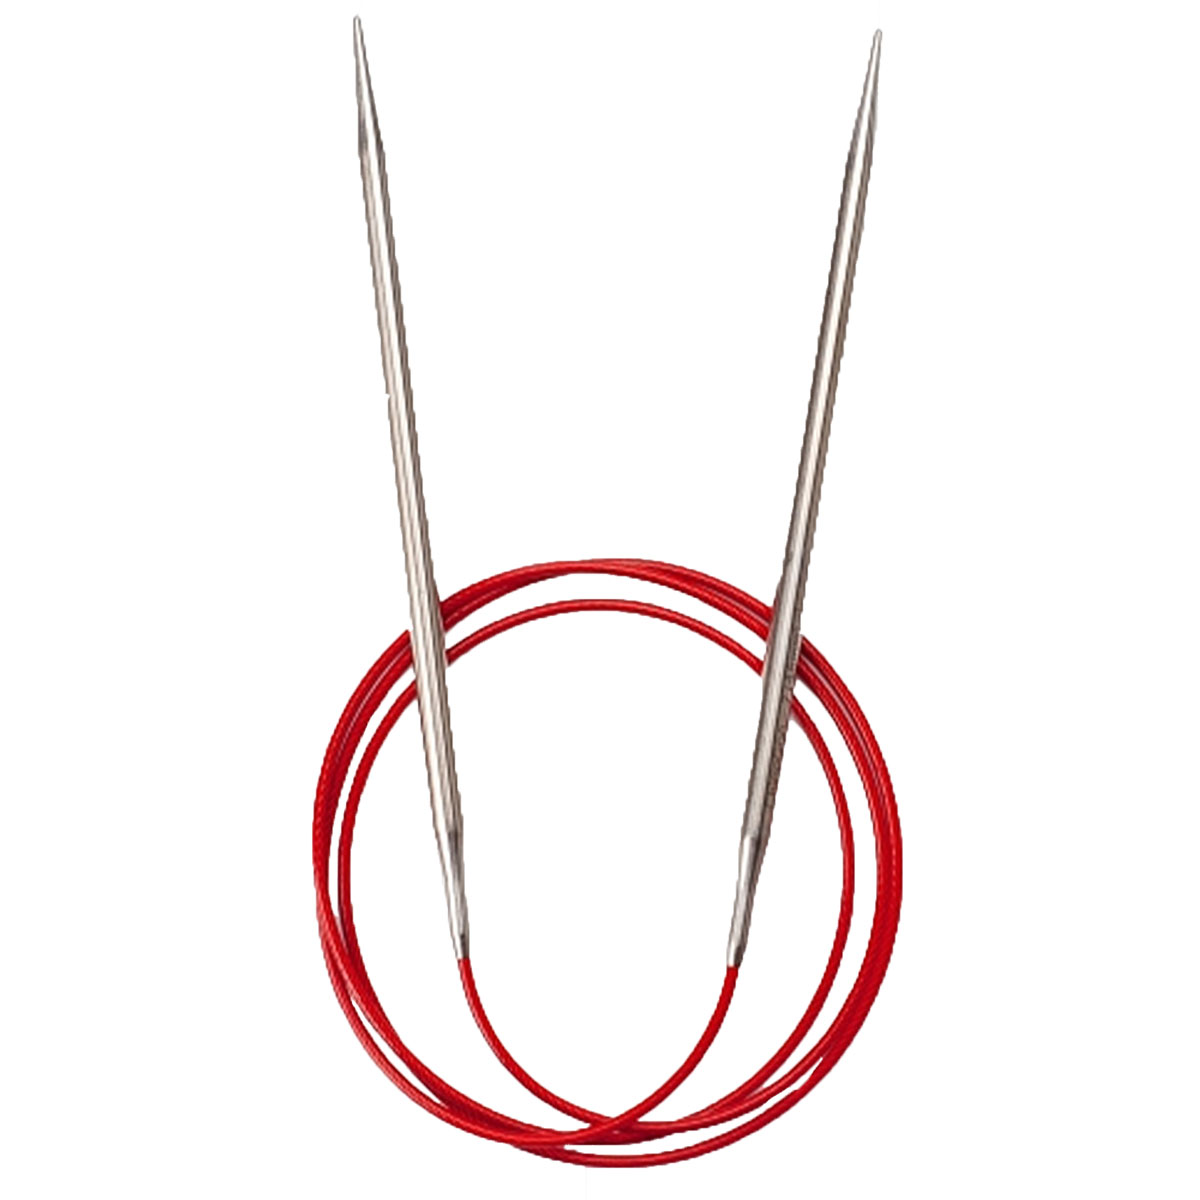 ChiaoGoo RED Lace Circular Needles - US 17 (12.75mm) - 60 Needles